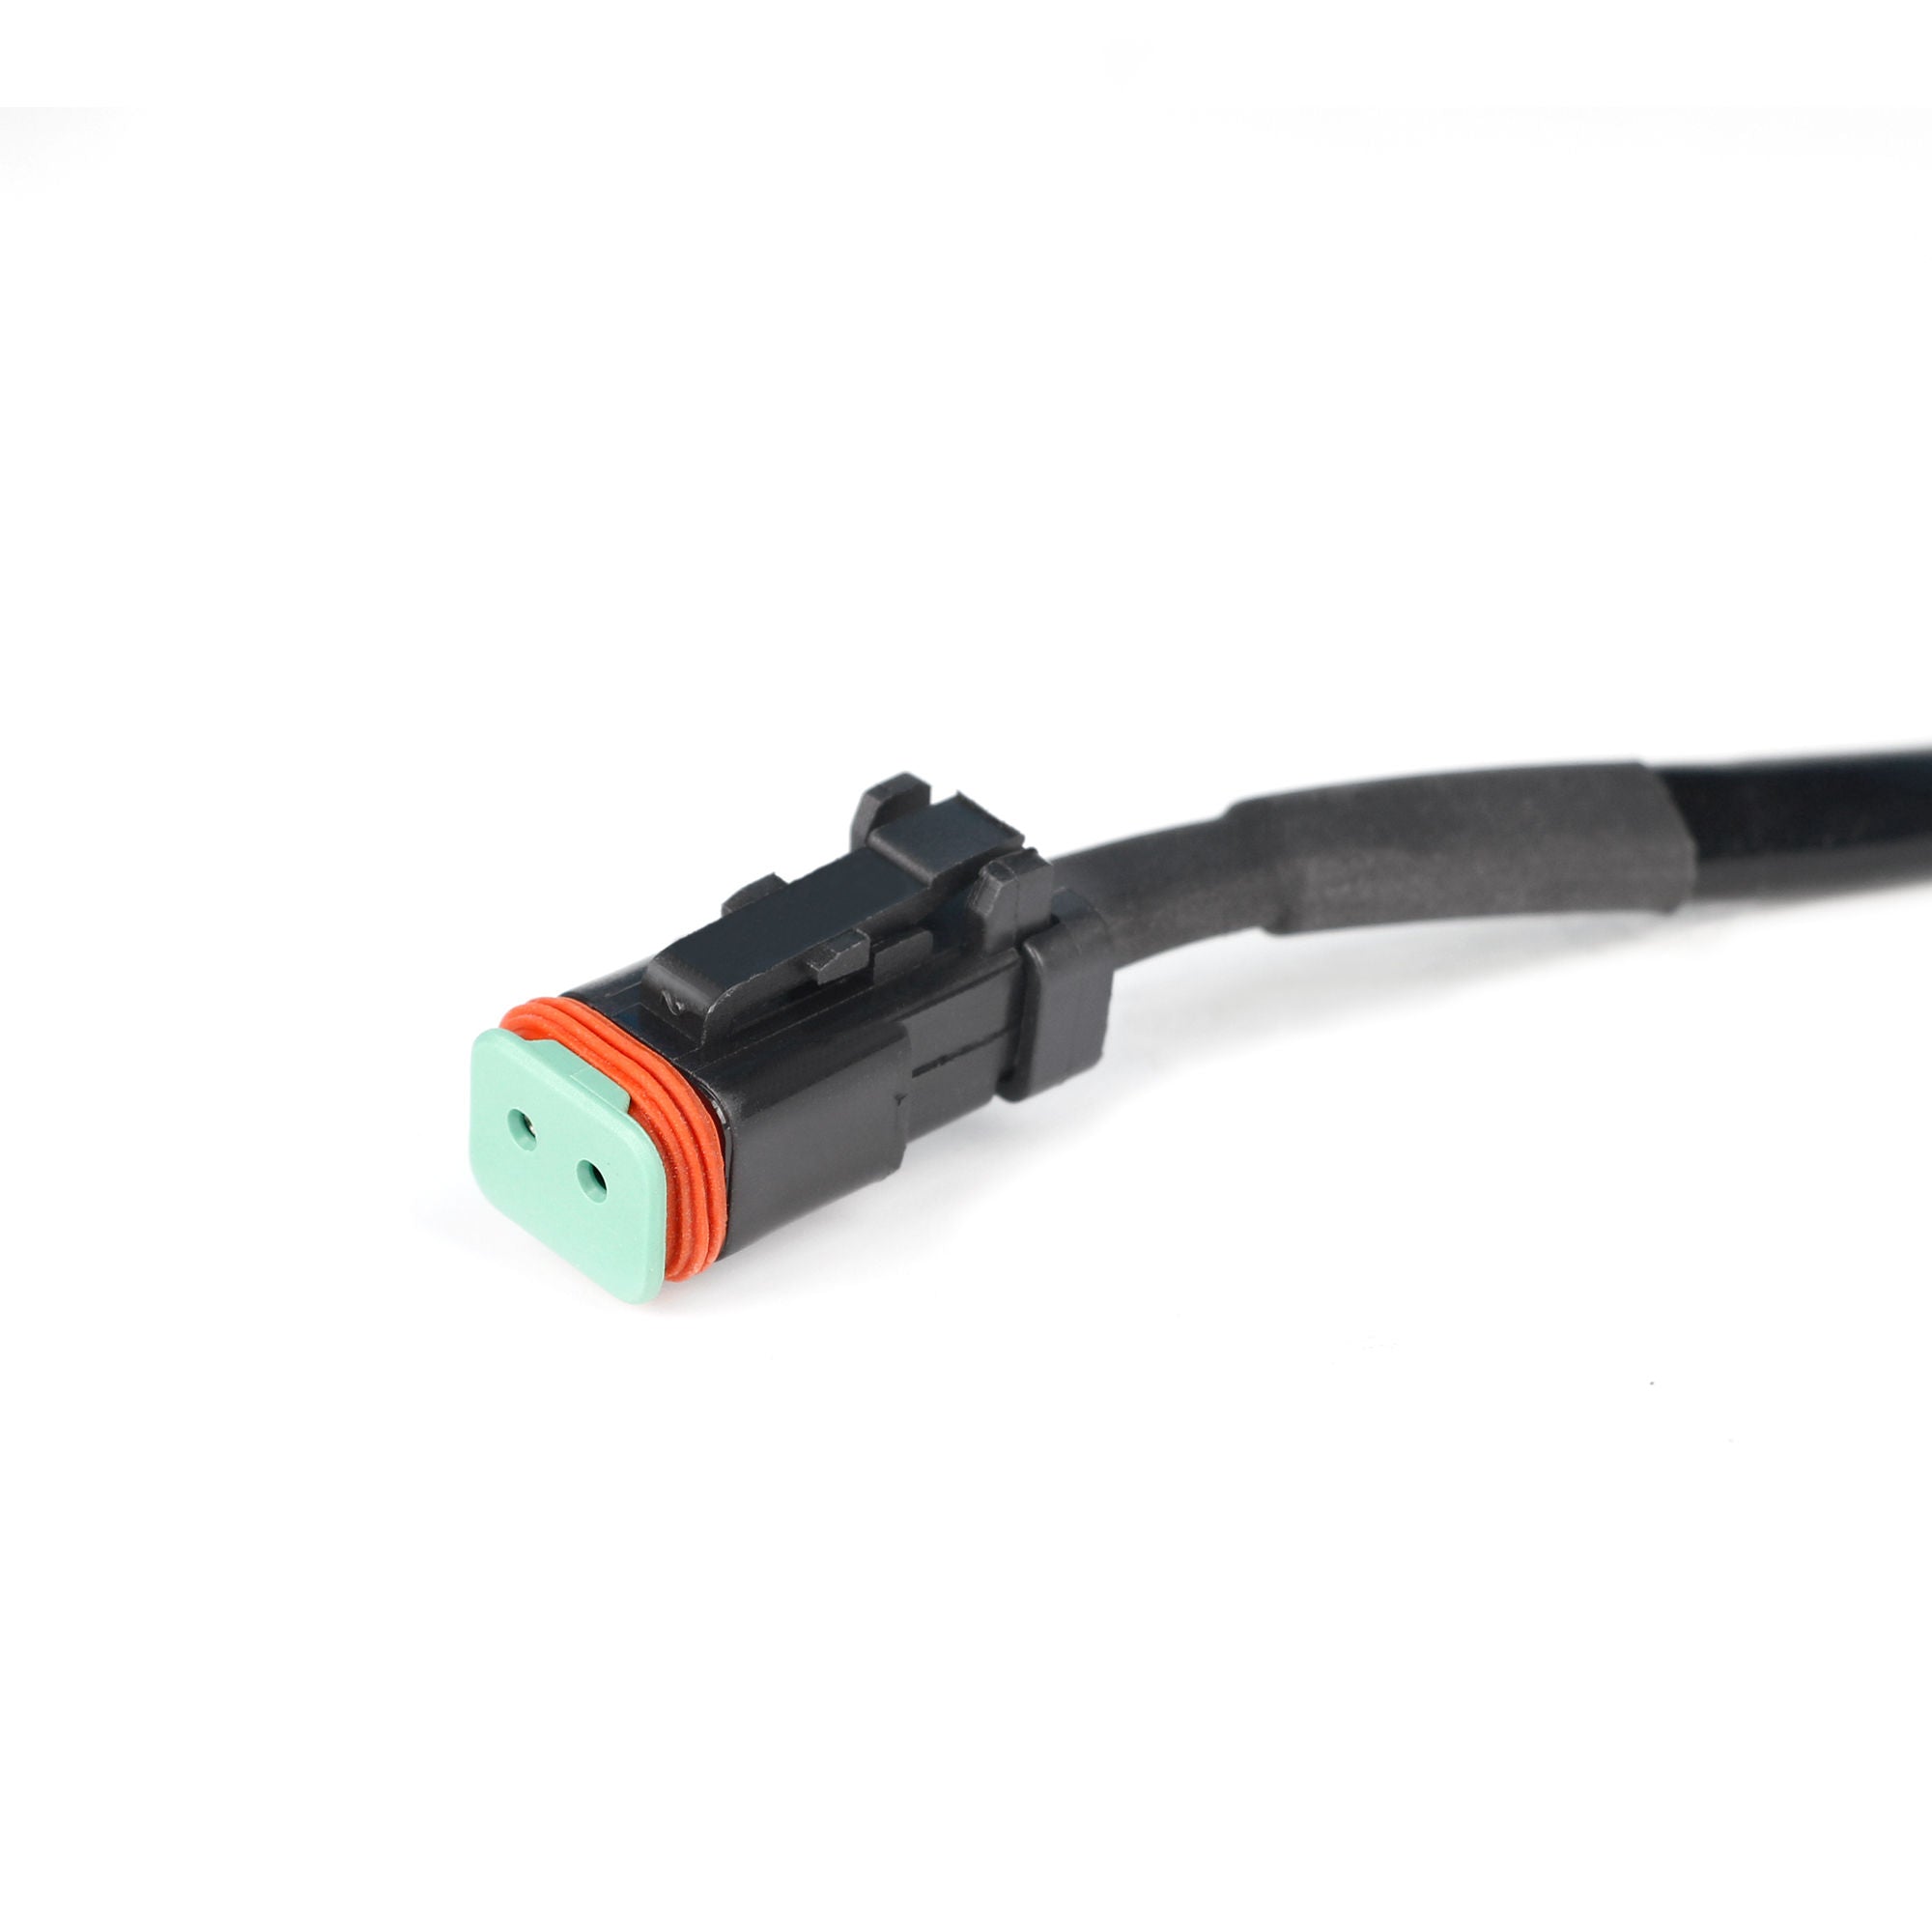 RTX RTXOA840001 - Switch & Harness, 1 outputs, Dutch 2 pins, Max 288W